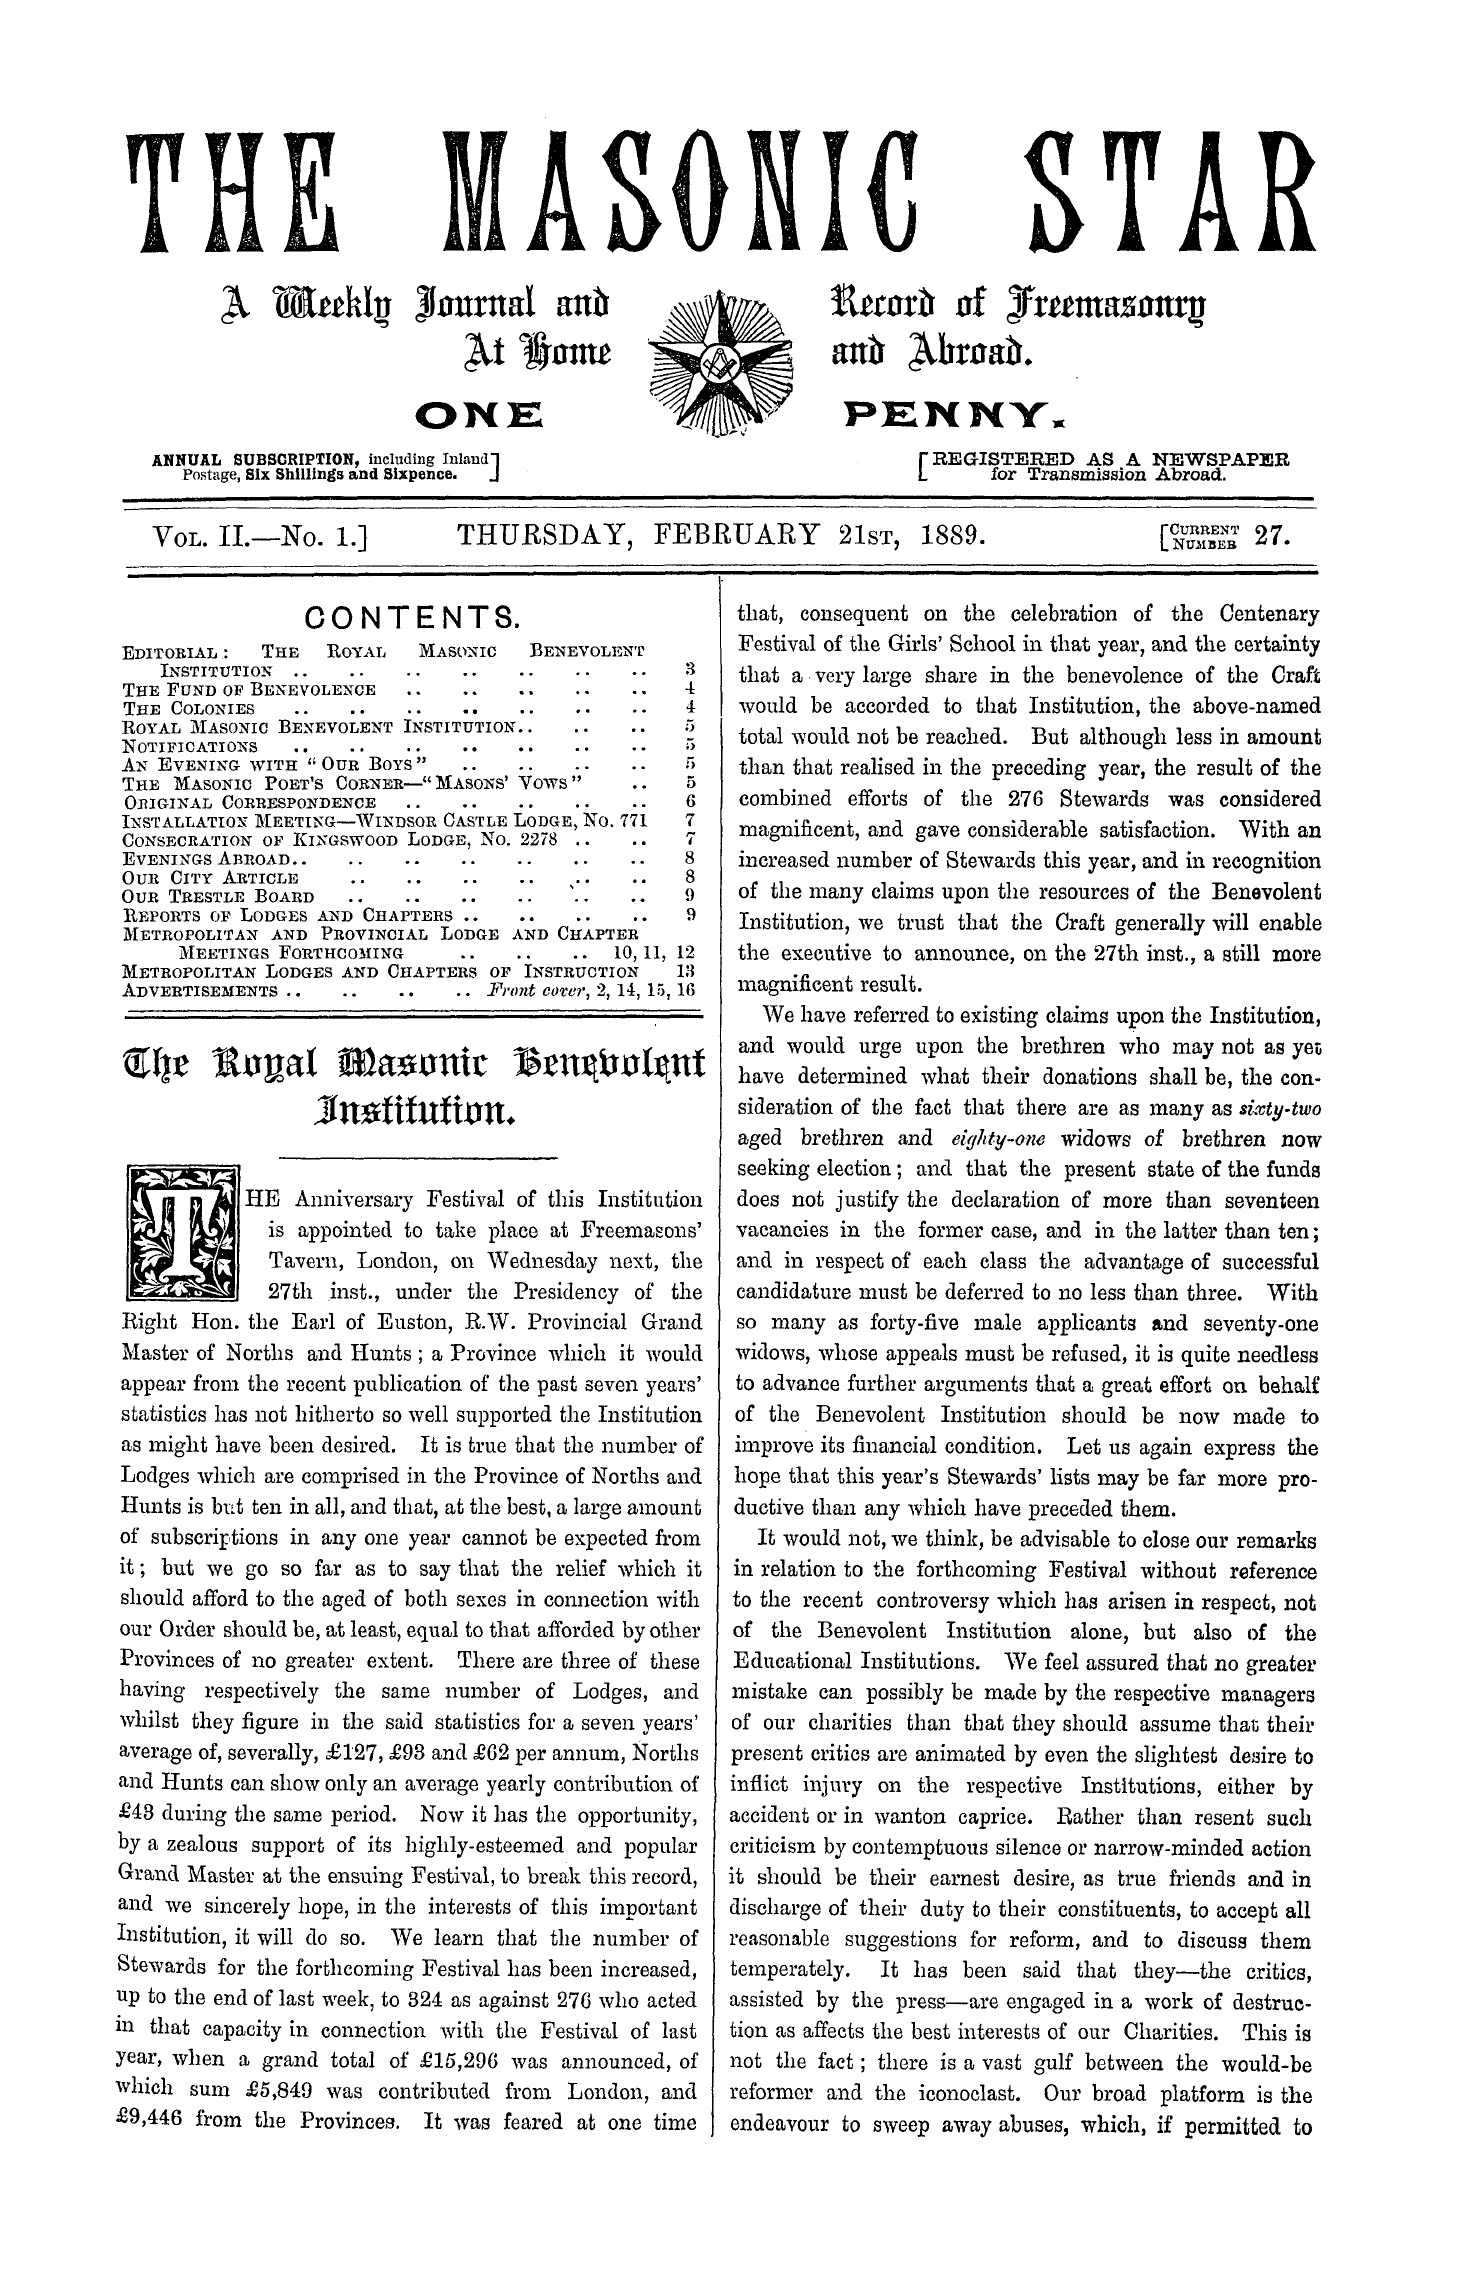 The Masonic Star: 1889-02-21 - Contents.